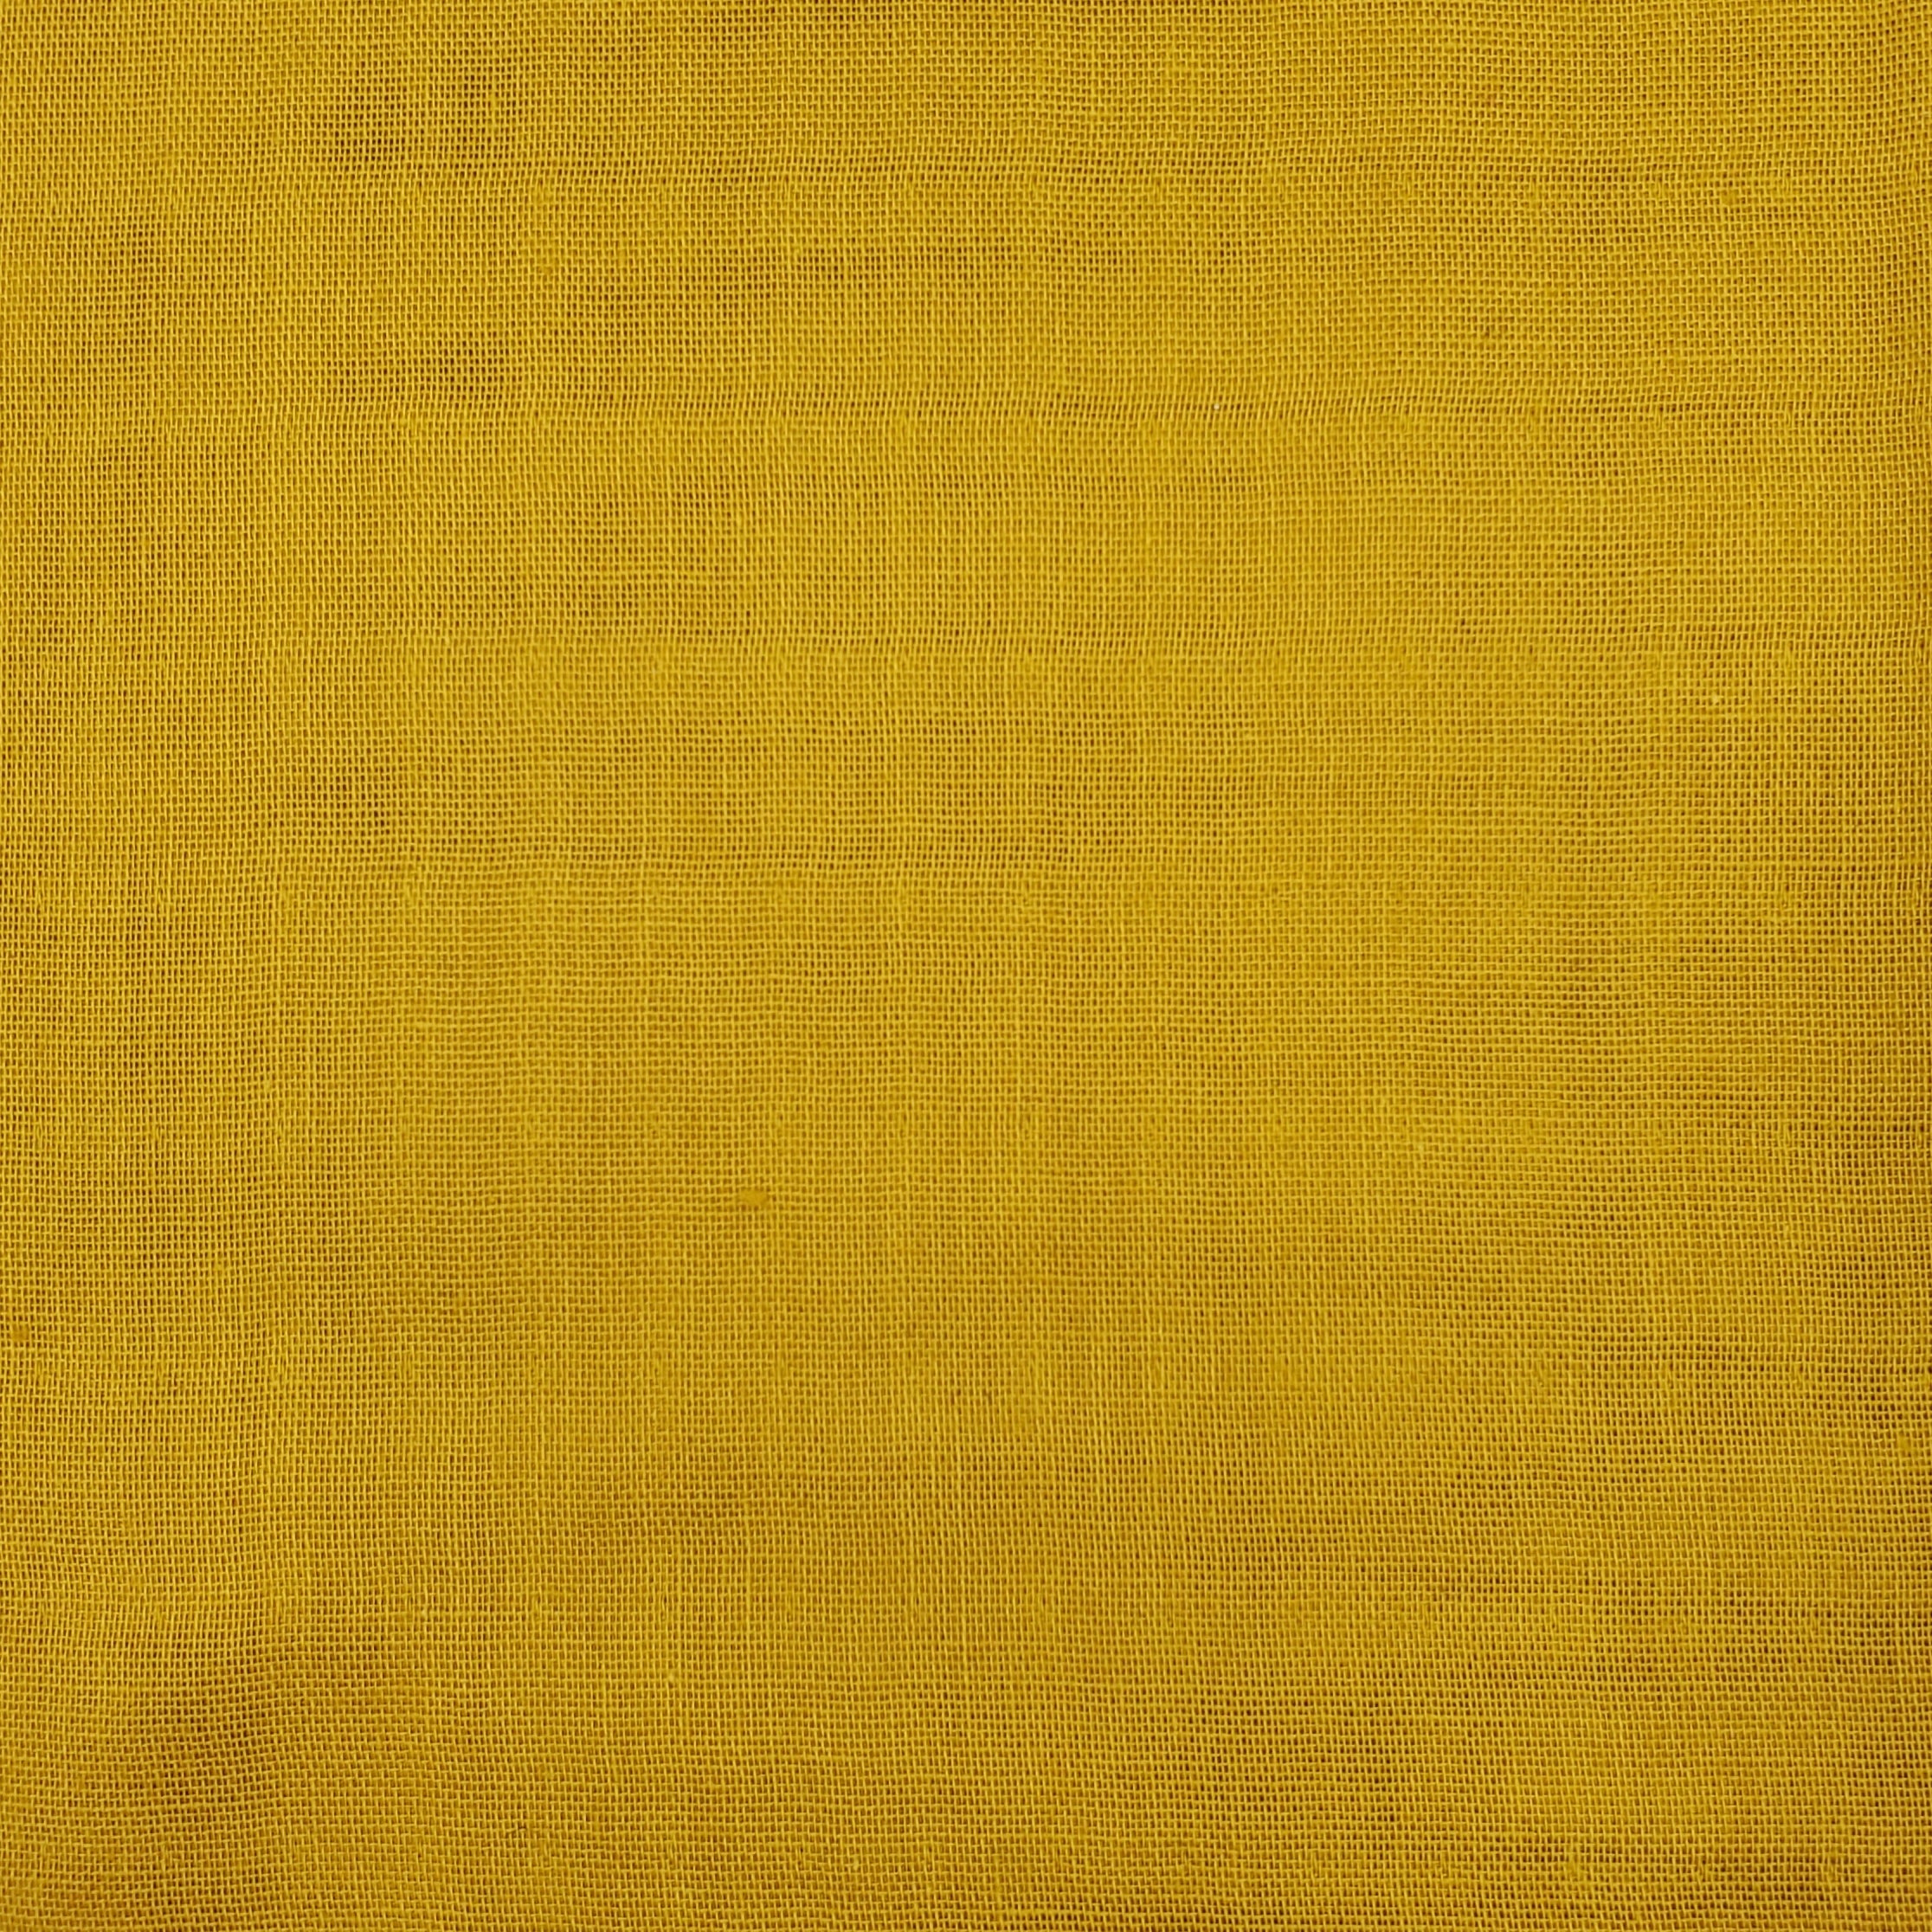 Ichi No Kire Solid Color 13 Mustard | Double Gauze